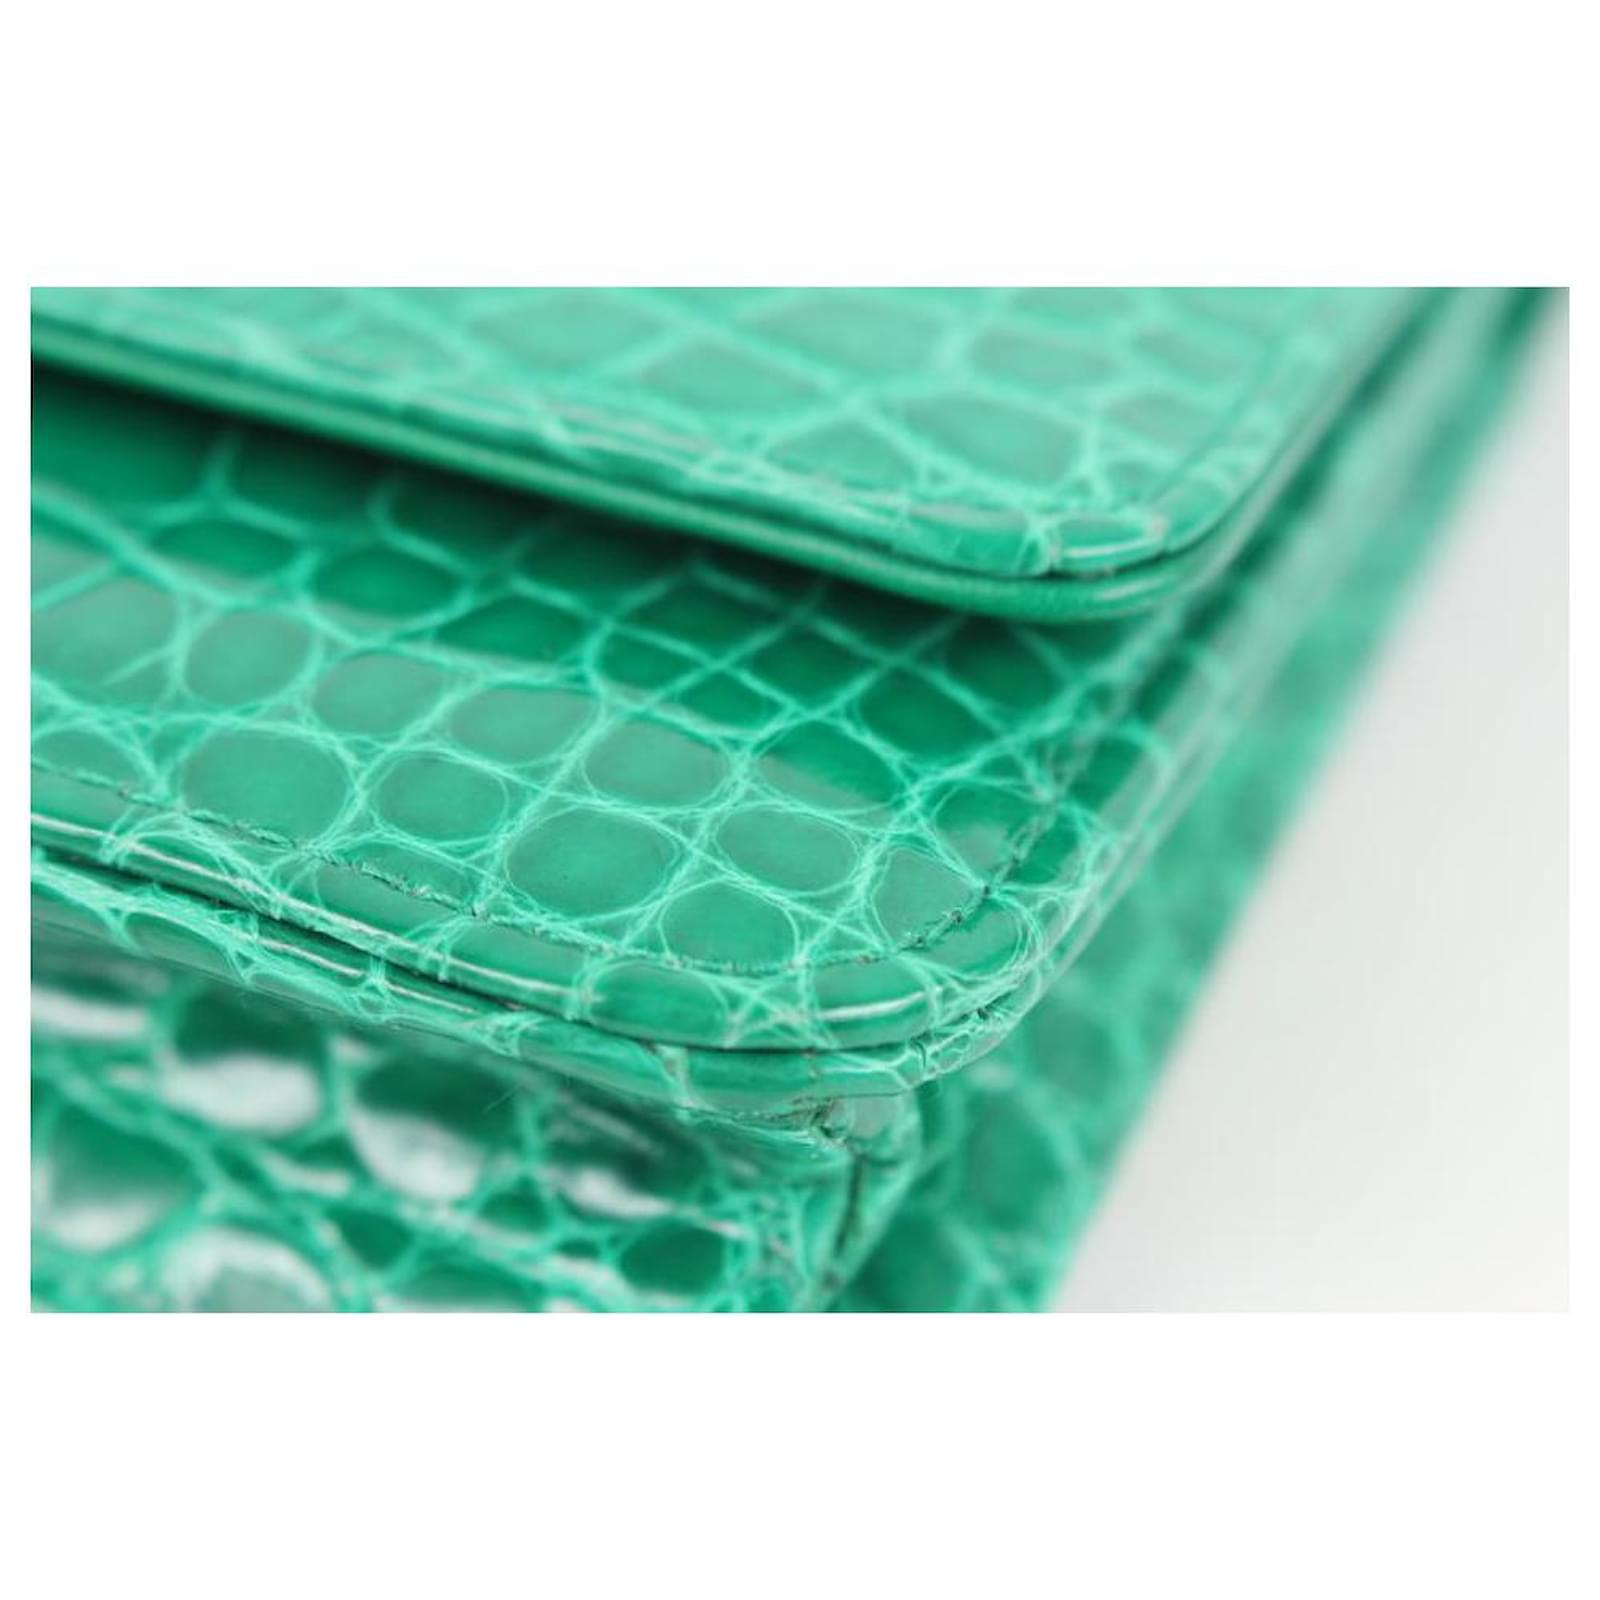 Chanel WOC Emerald Crocodile Bag